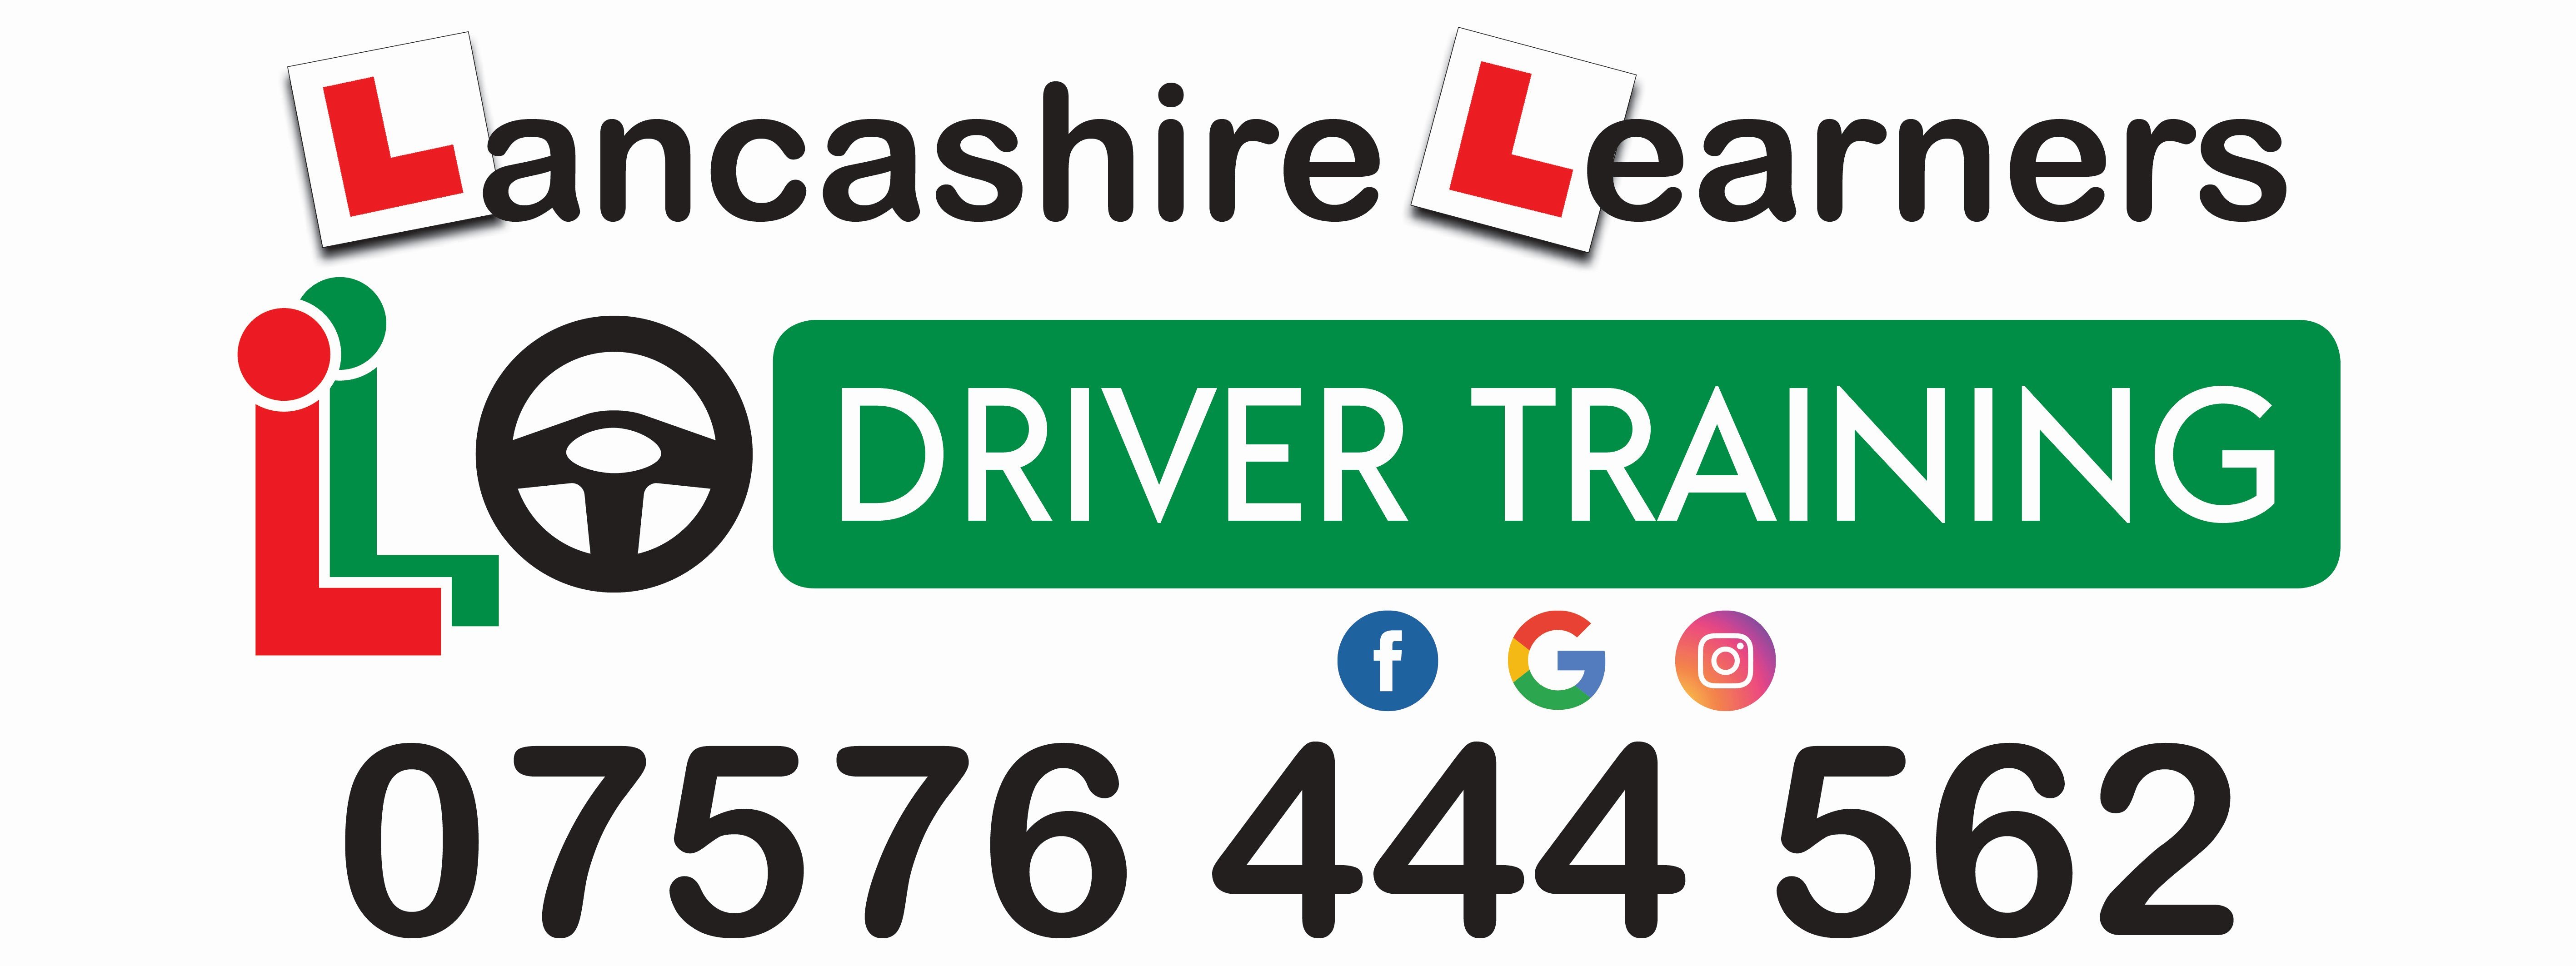 Lancashire Learners Driver Training